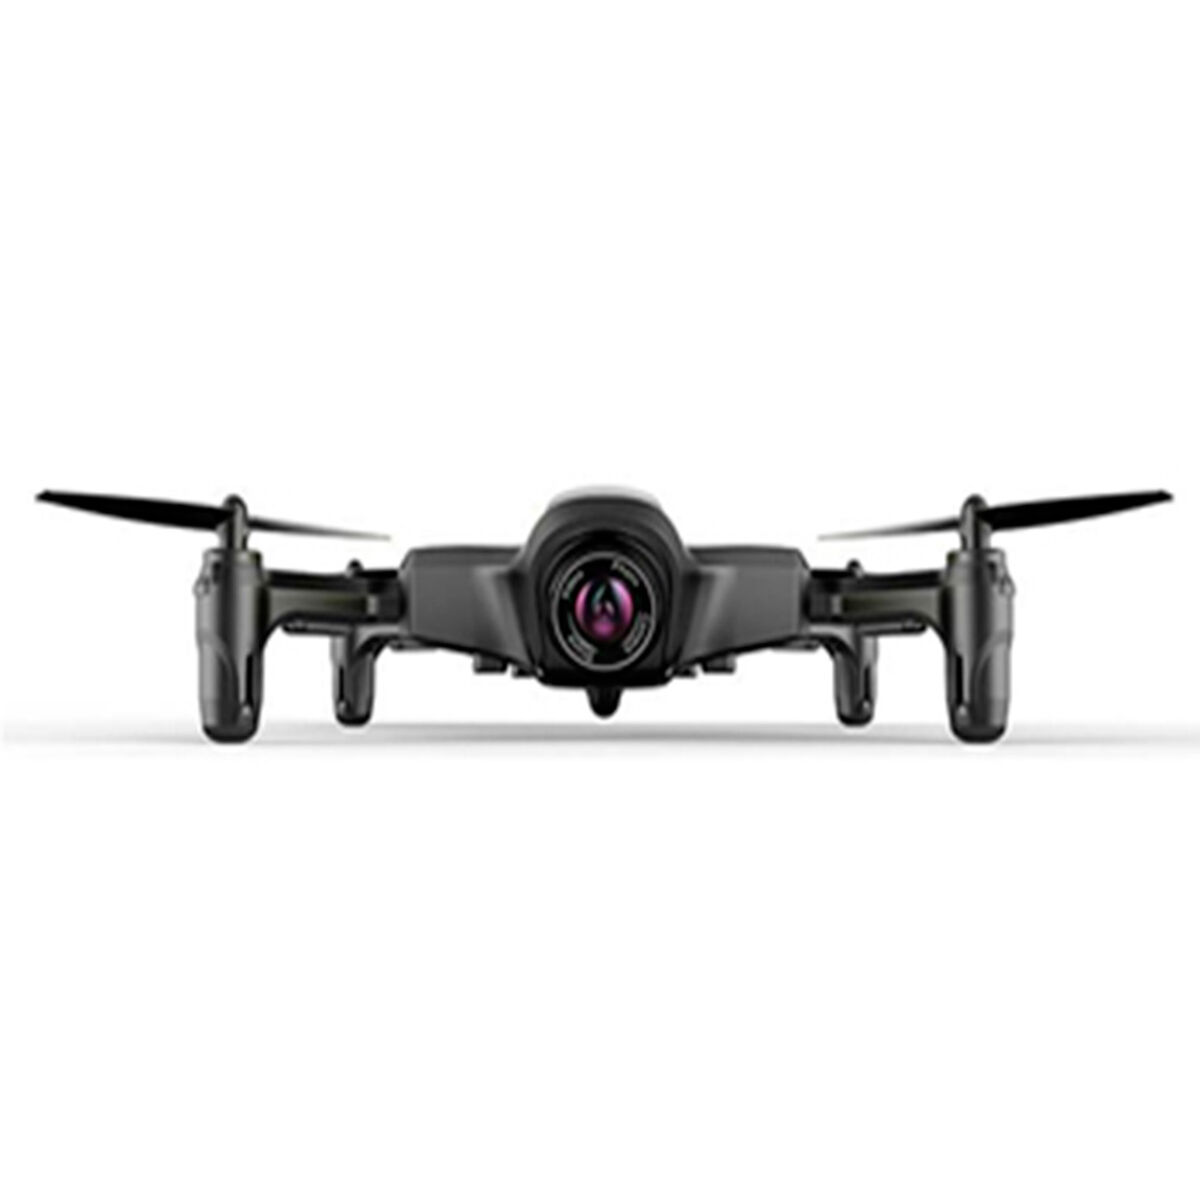 Dron Udirc LVR + Lente VR